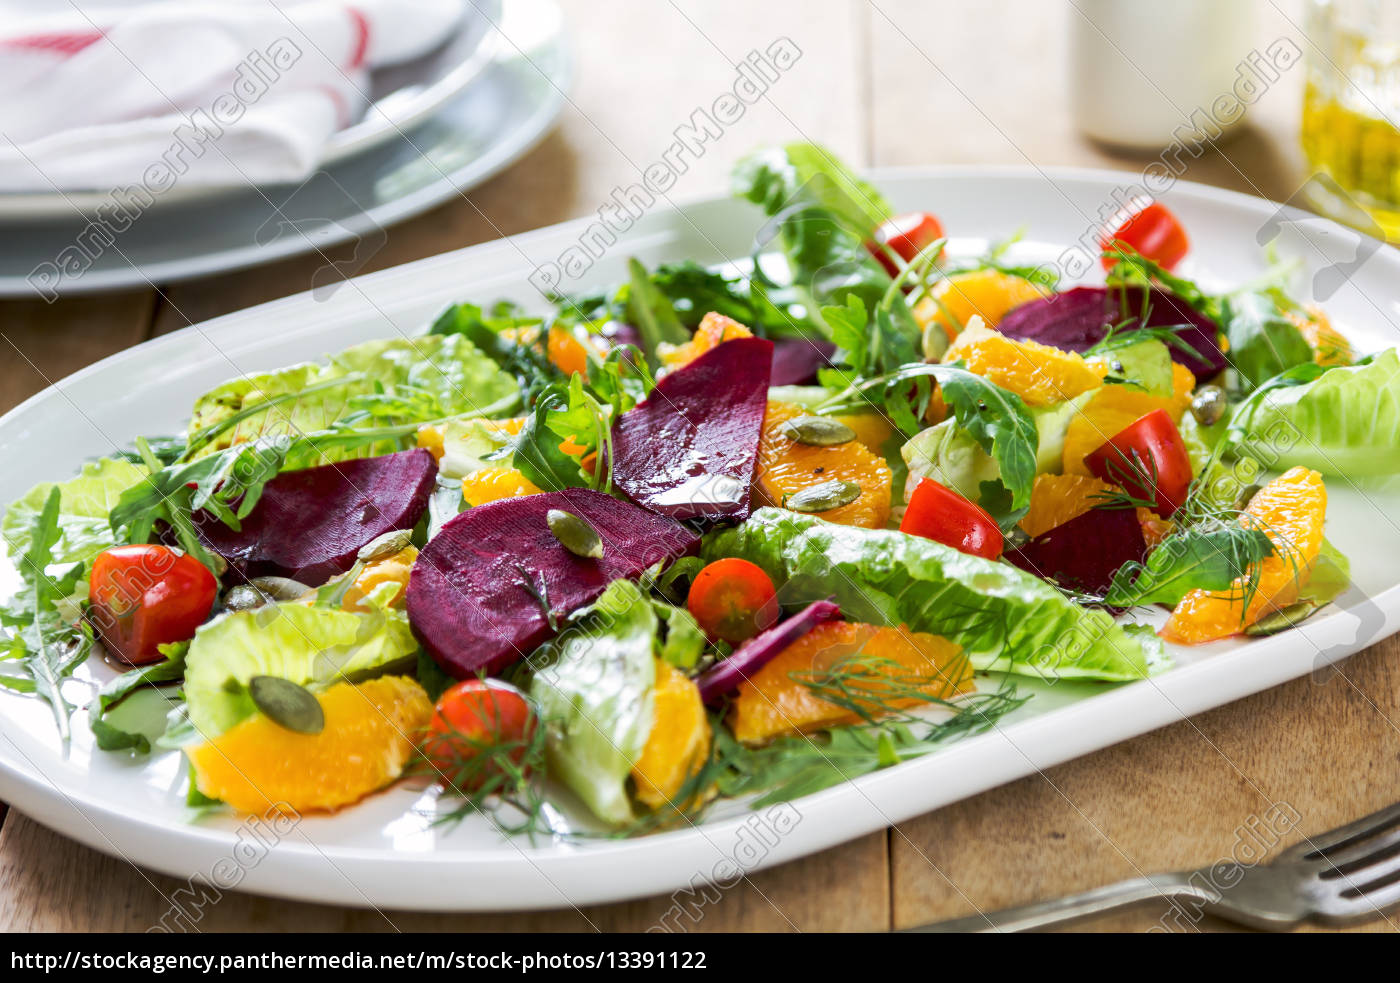 Orange mit Beetroot Salat - Stock Photo - #13391122 | Bildagentur ...